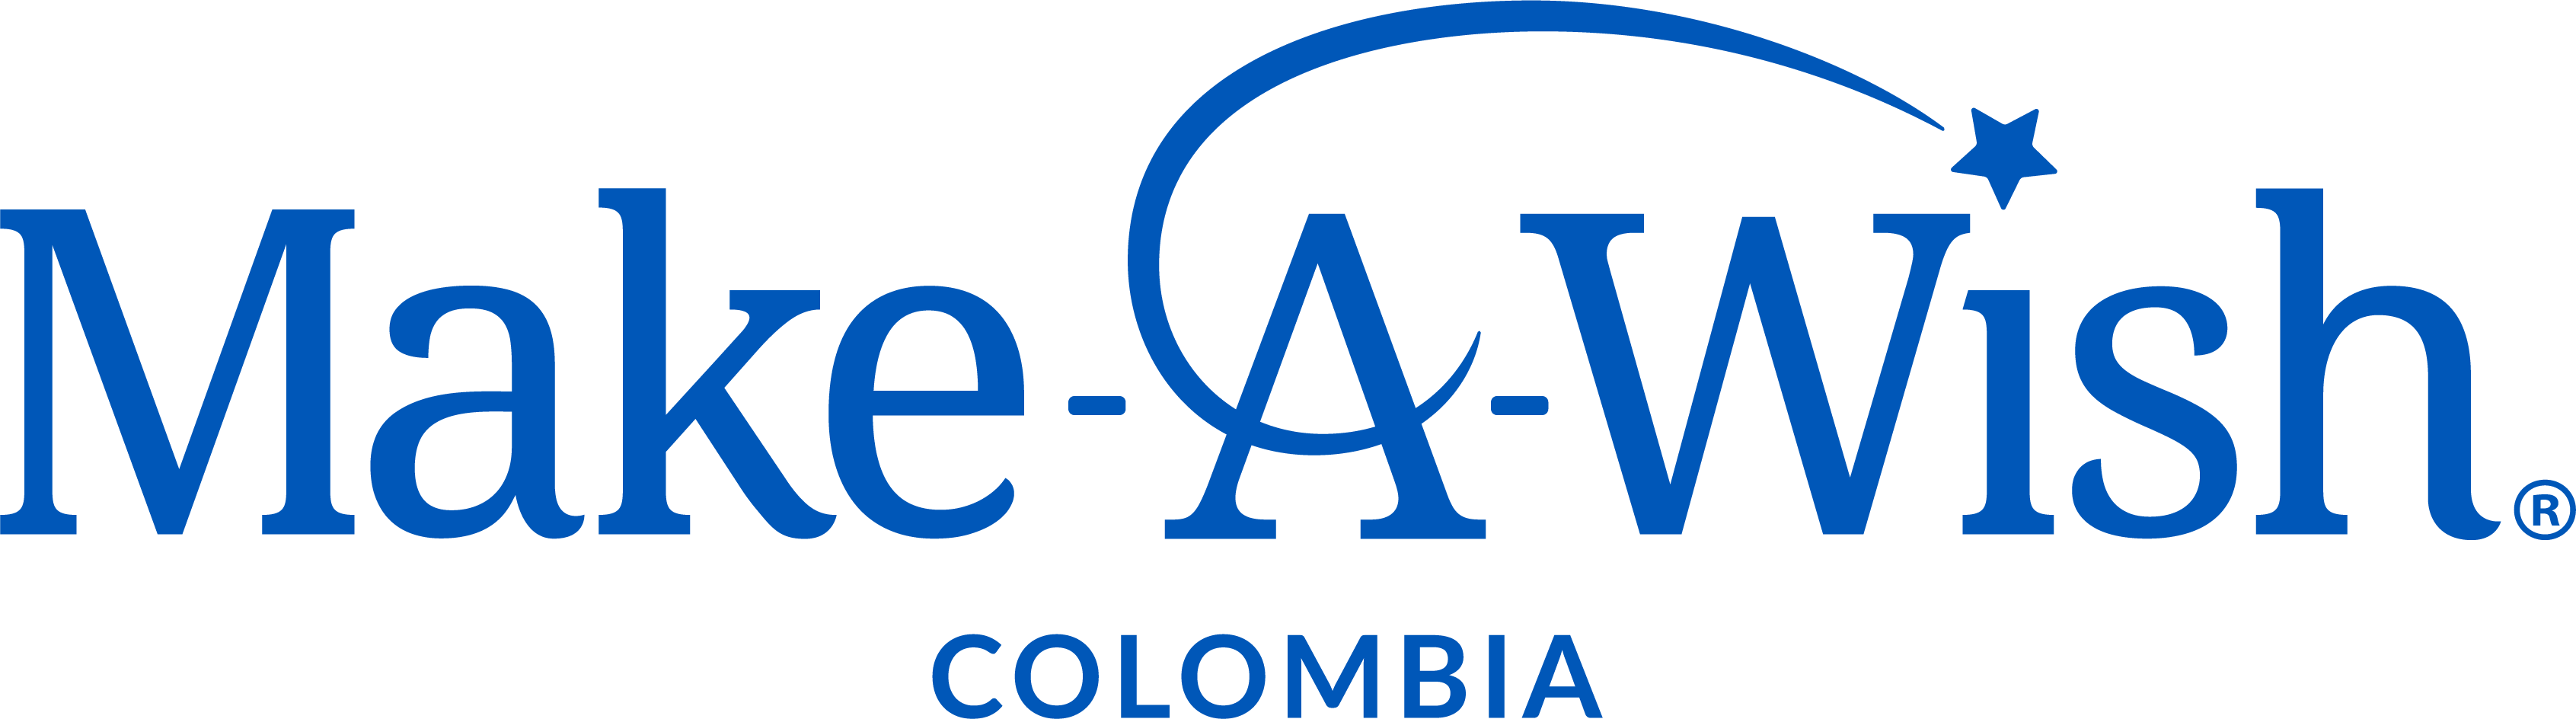 Make-A-Wish Colombia logo